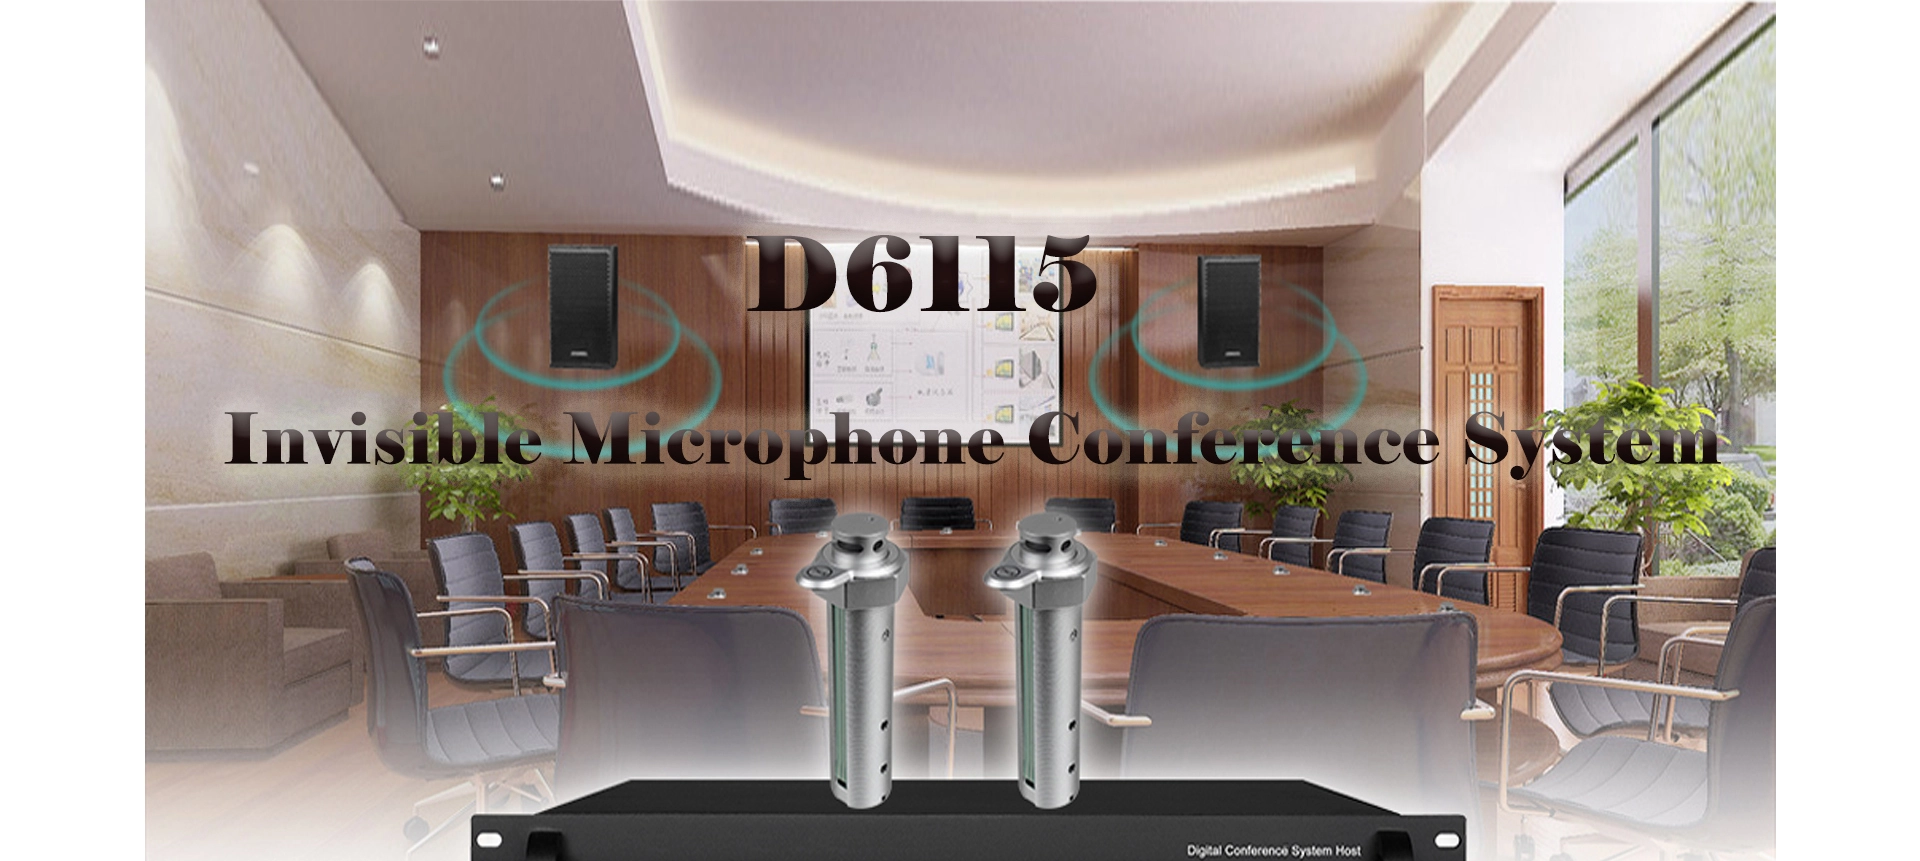 Digital Multifunction Conference System Host